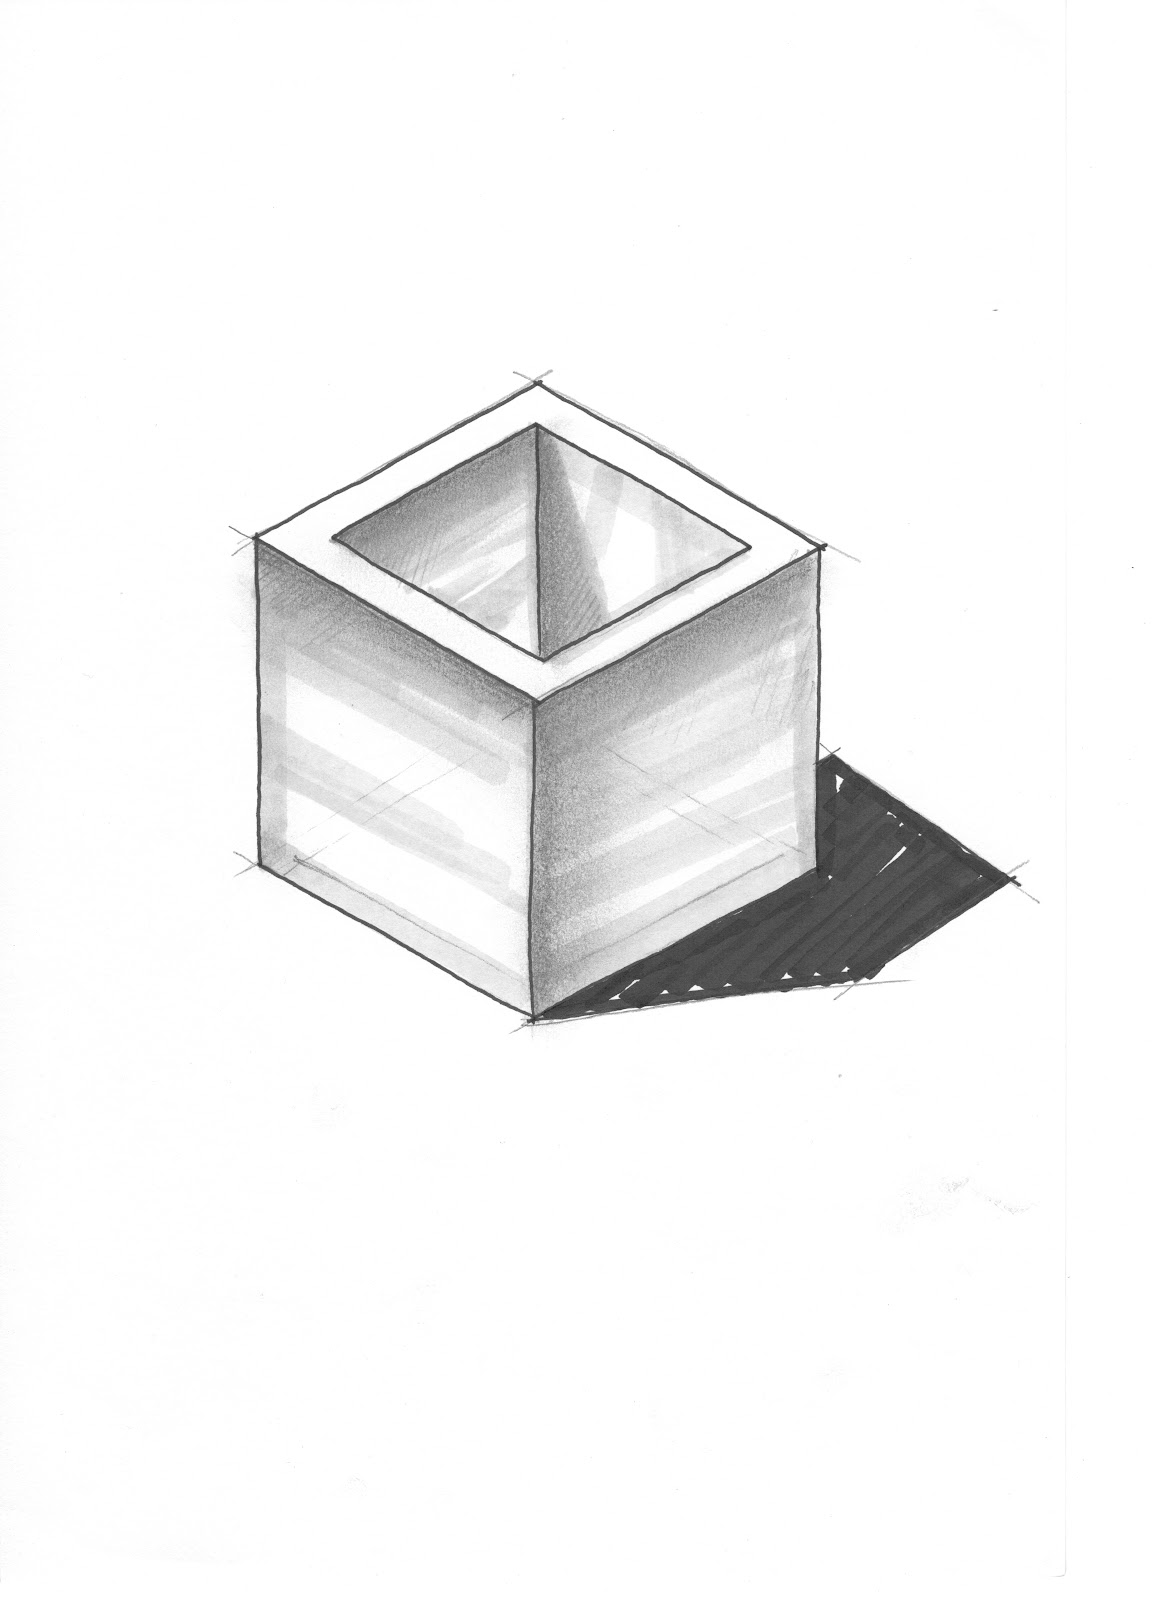 Architectural Design 5: Cube Manipulation